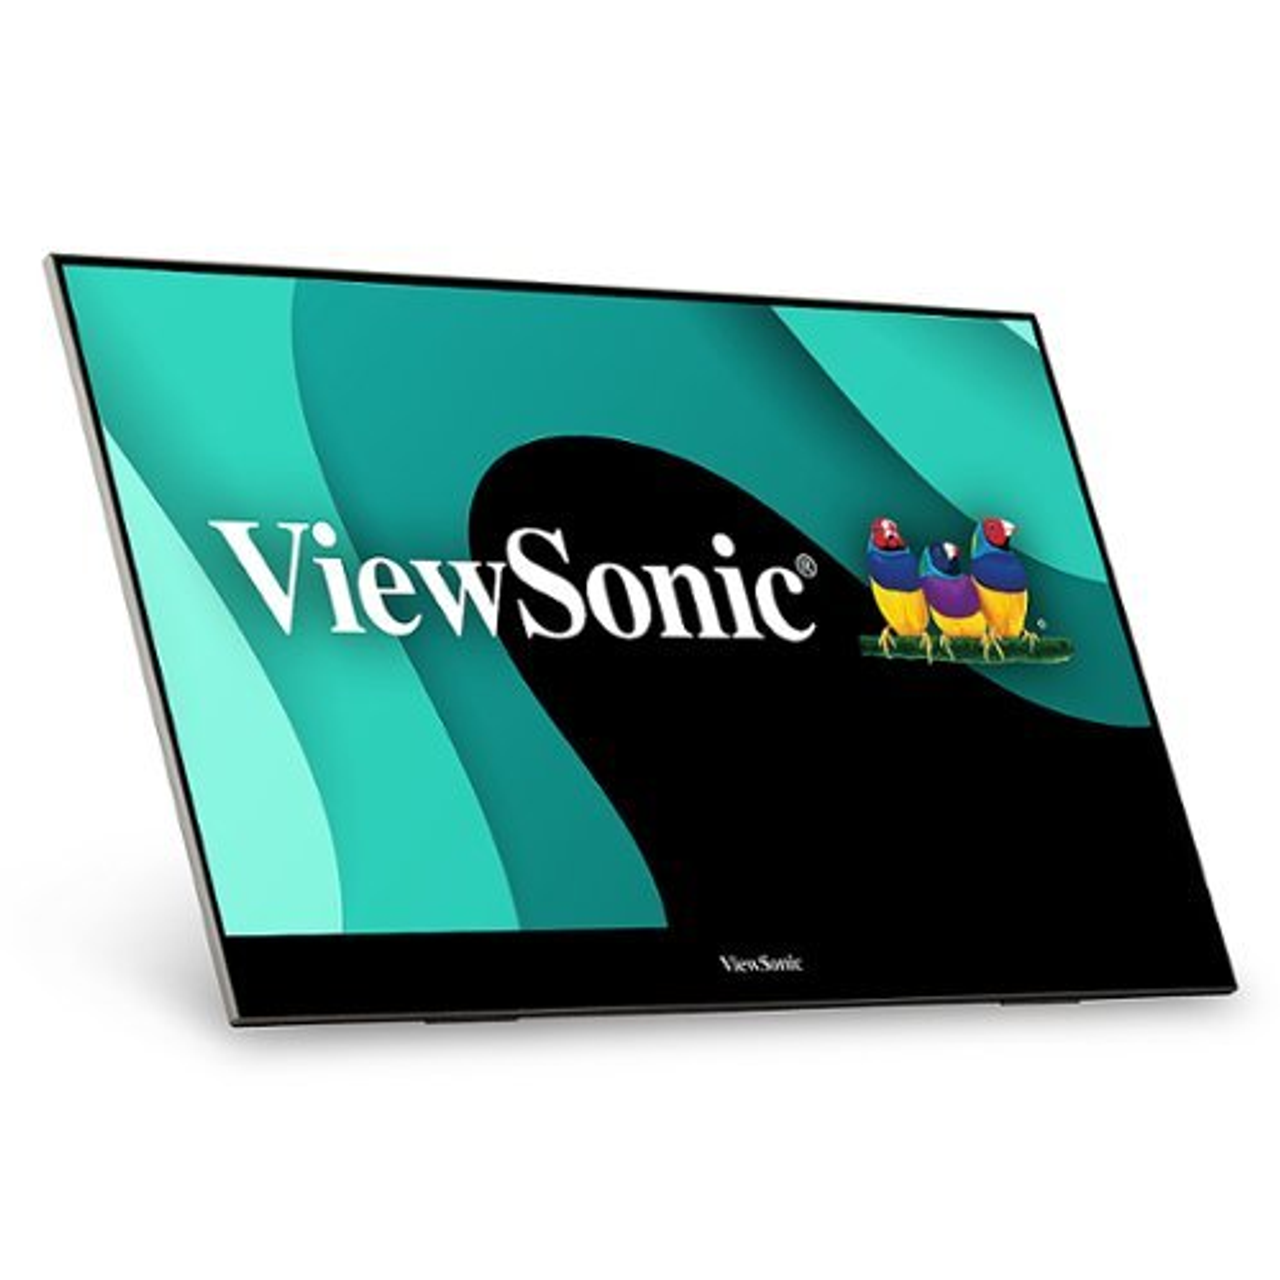 ViewSonic - VX1655-4K 15.6" OLED UHD Portable Monitor (USB-C, Mini HDMI) - Black